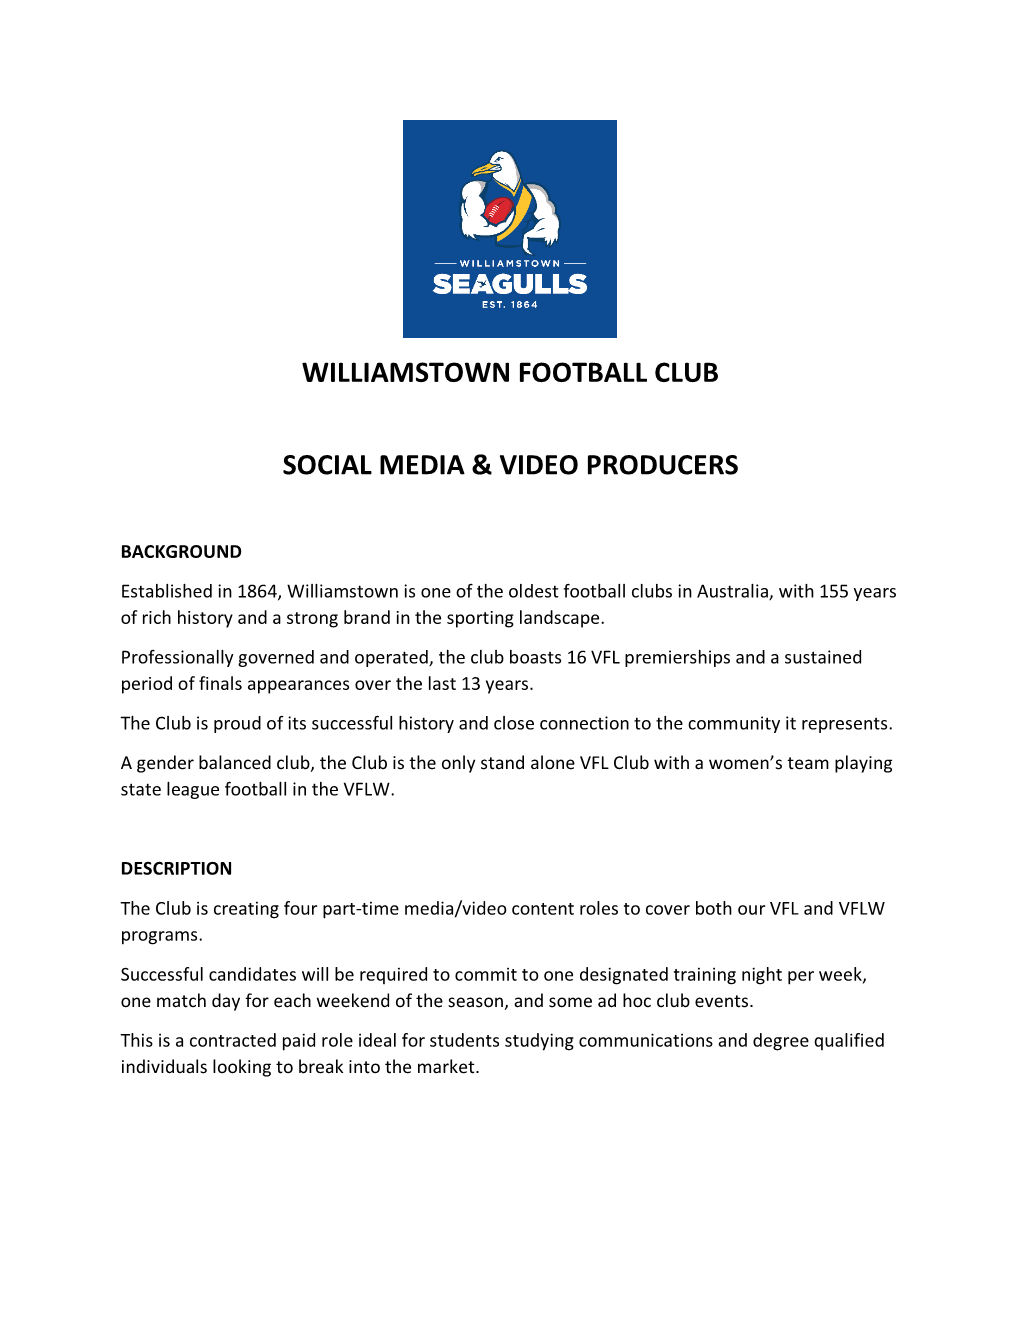 Williamstown Football Club Social Media & Video